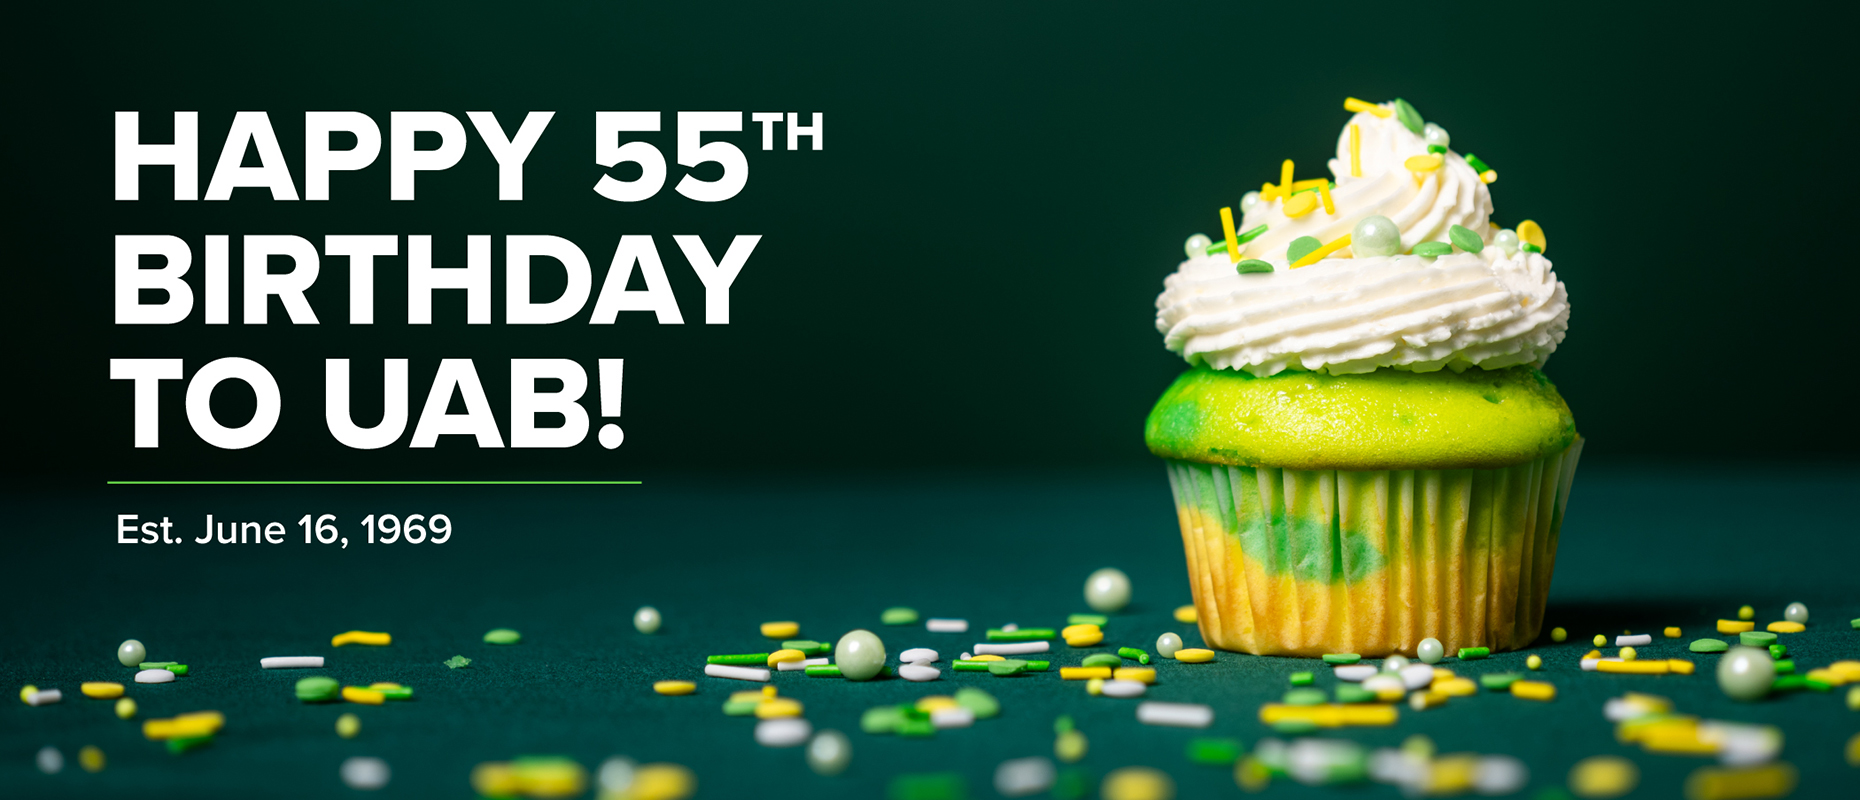 Happy 55th birthday to UAB! Established June 16, 1969.